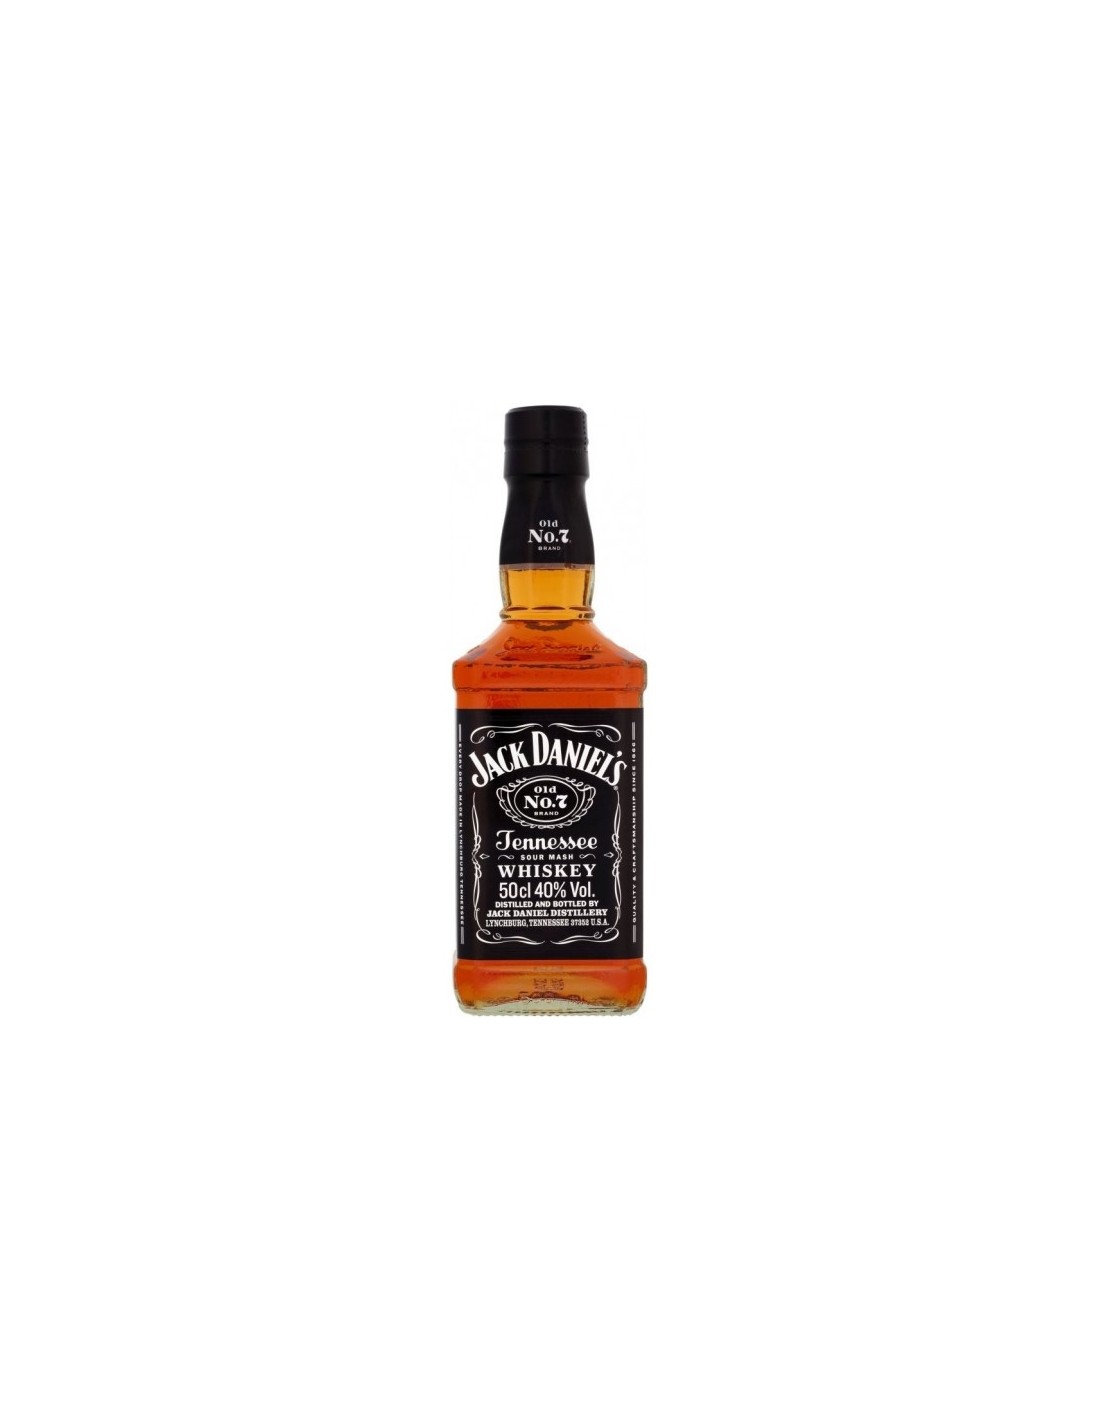 Whisky Jack Daniel’s 0.5L, 40% alc., SUA alcooldiscount.ro